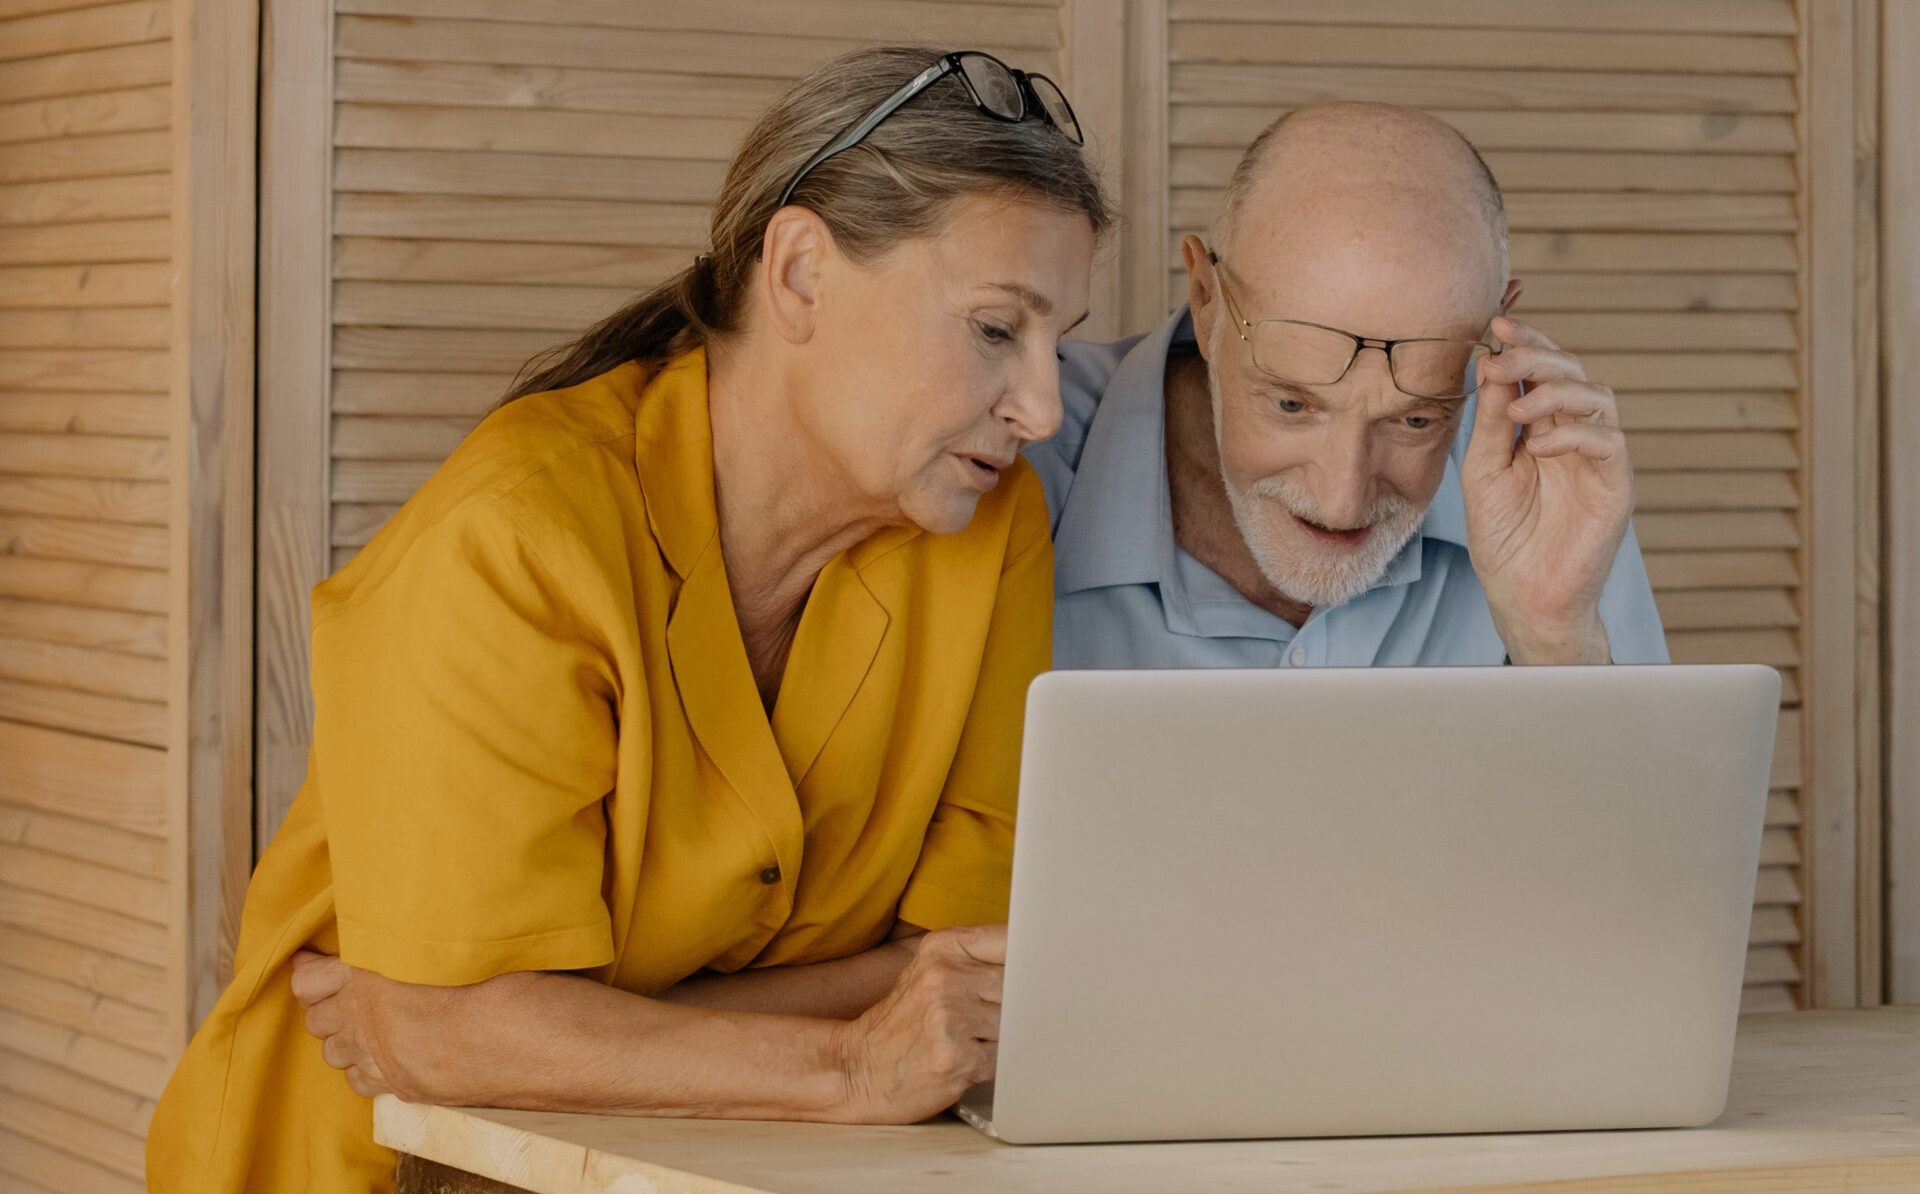 Woman showing man something on a laptop screen